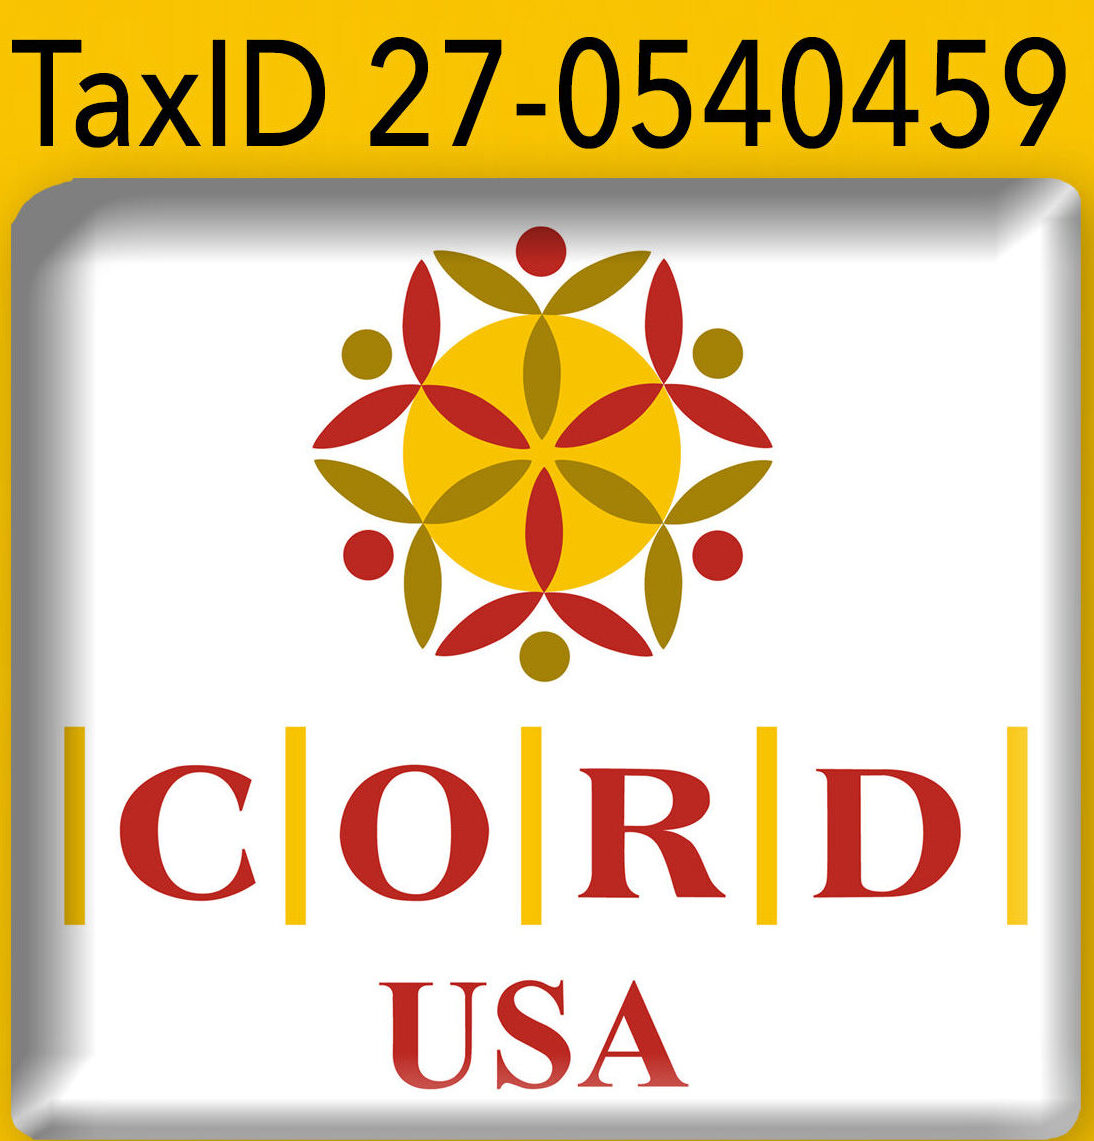 CORDUSA Inc